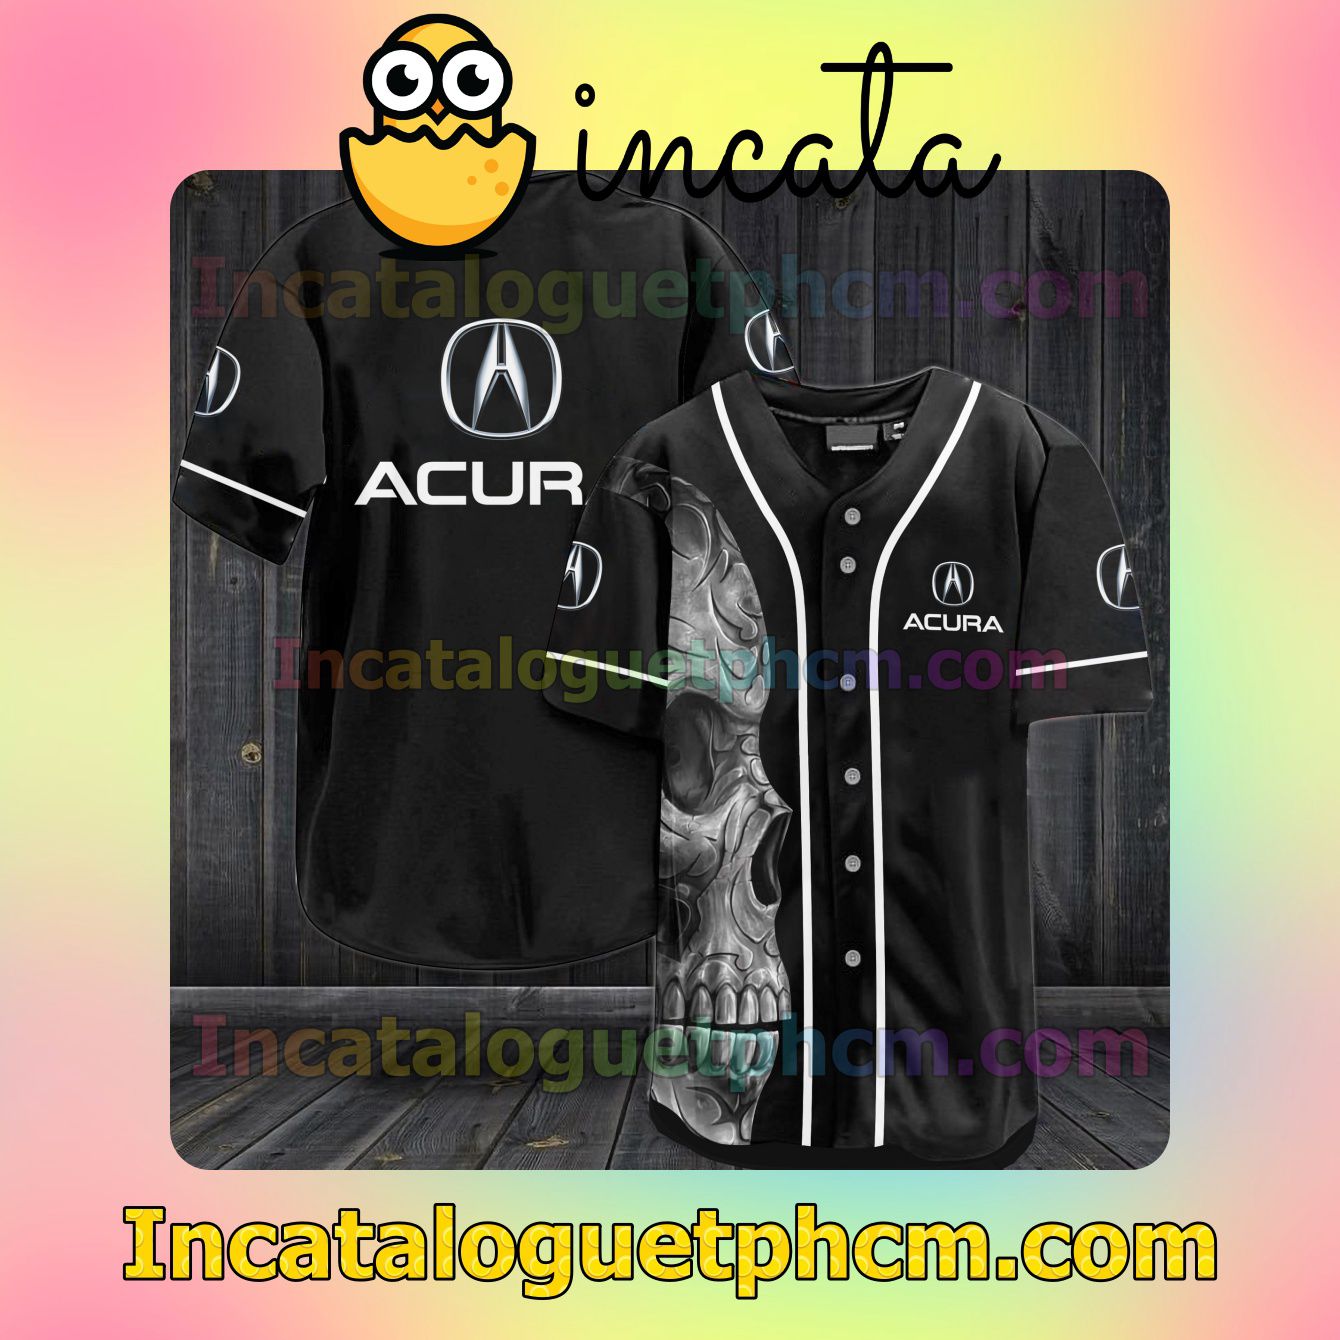 Acura Skull Baseball Jersey Shirt